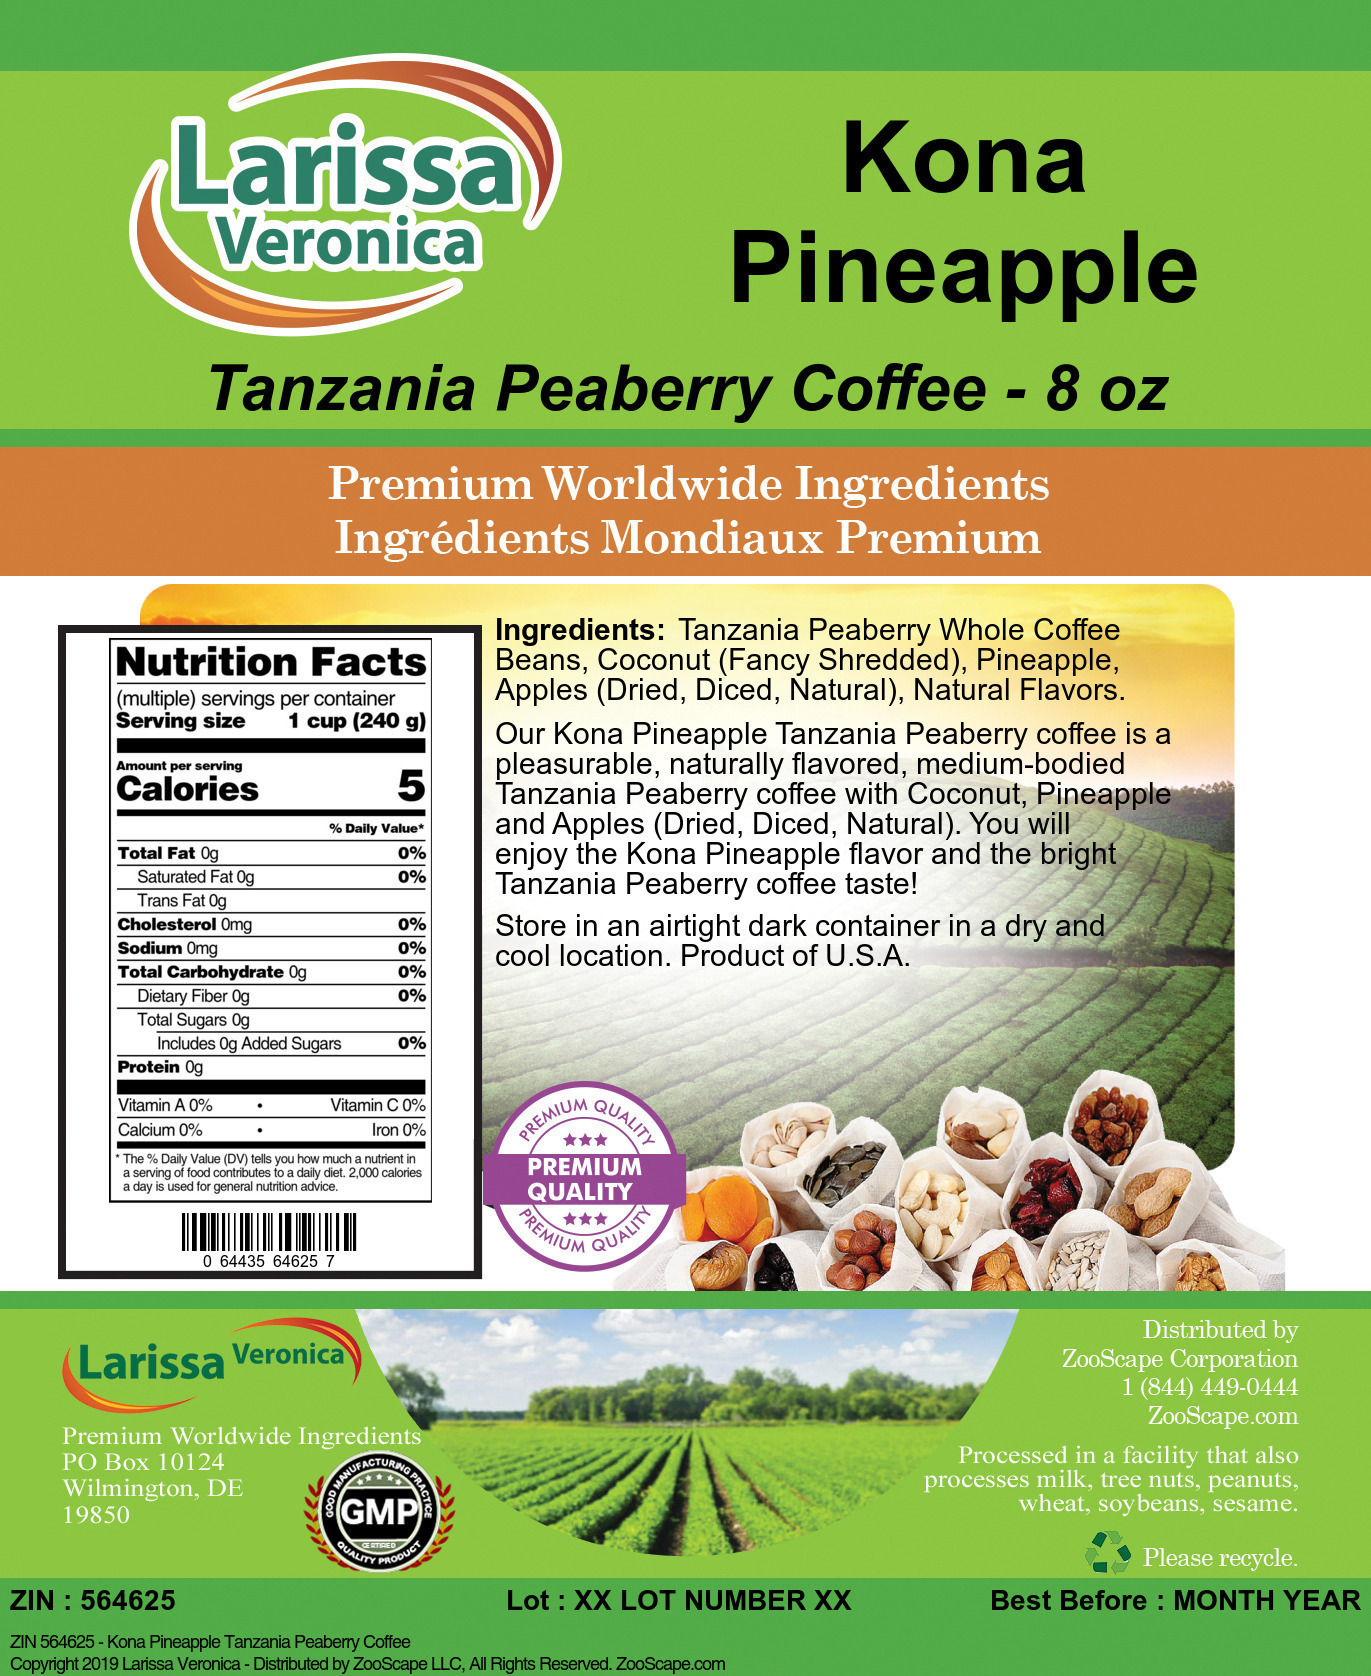 Kona Pineapple Tanzania Peaberry Coffee - Label